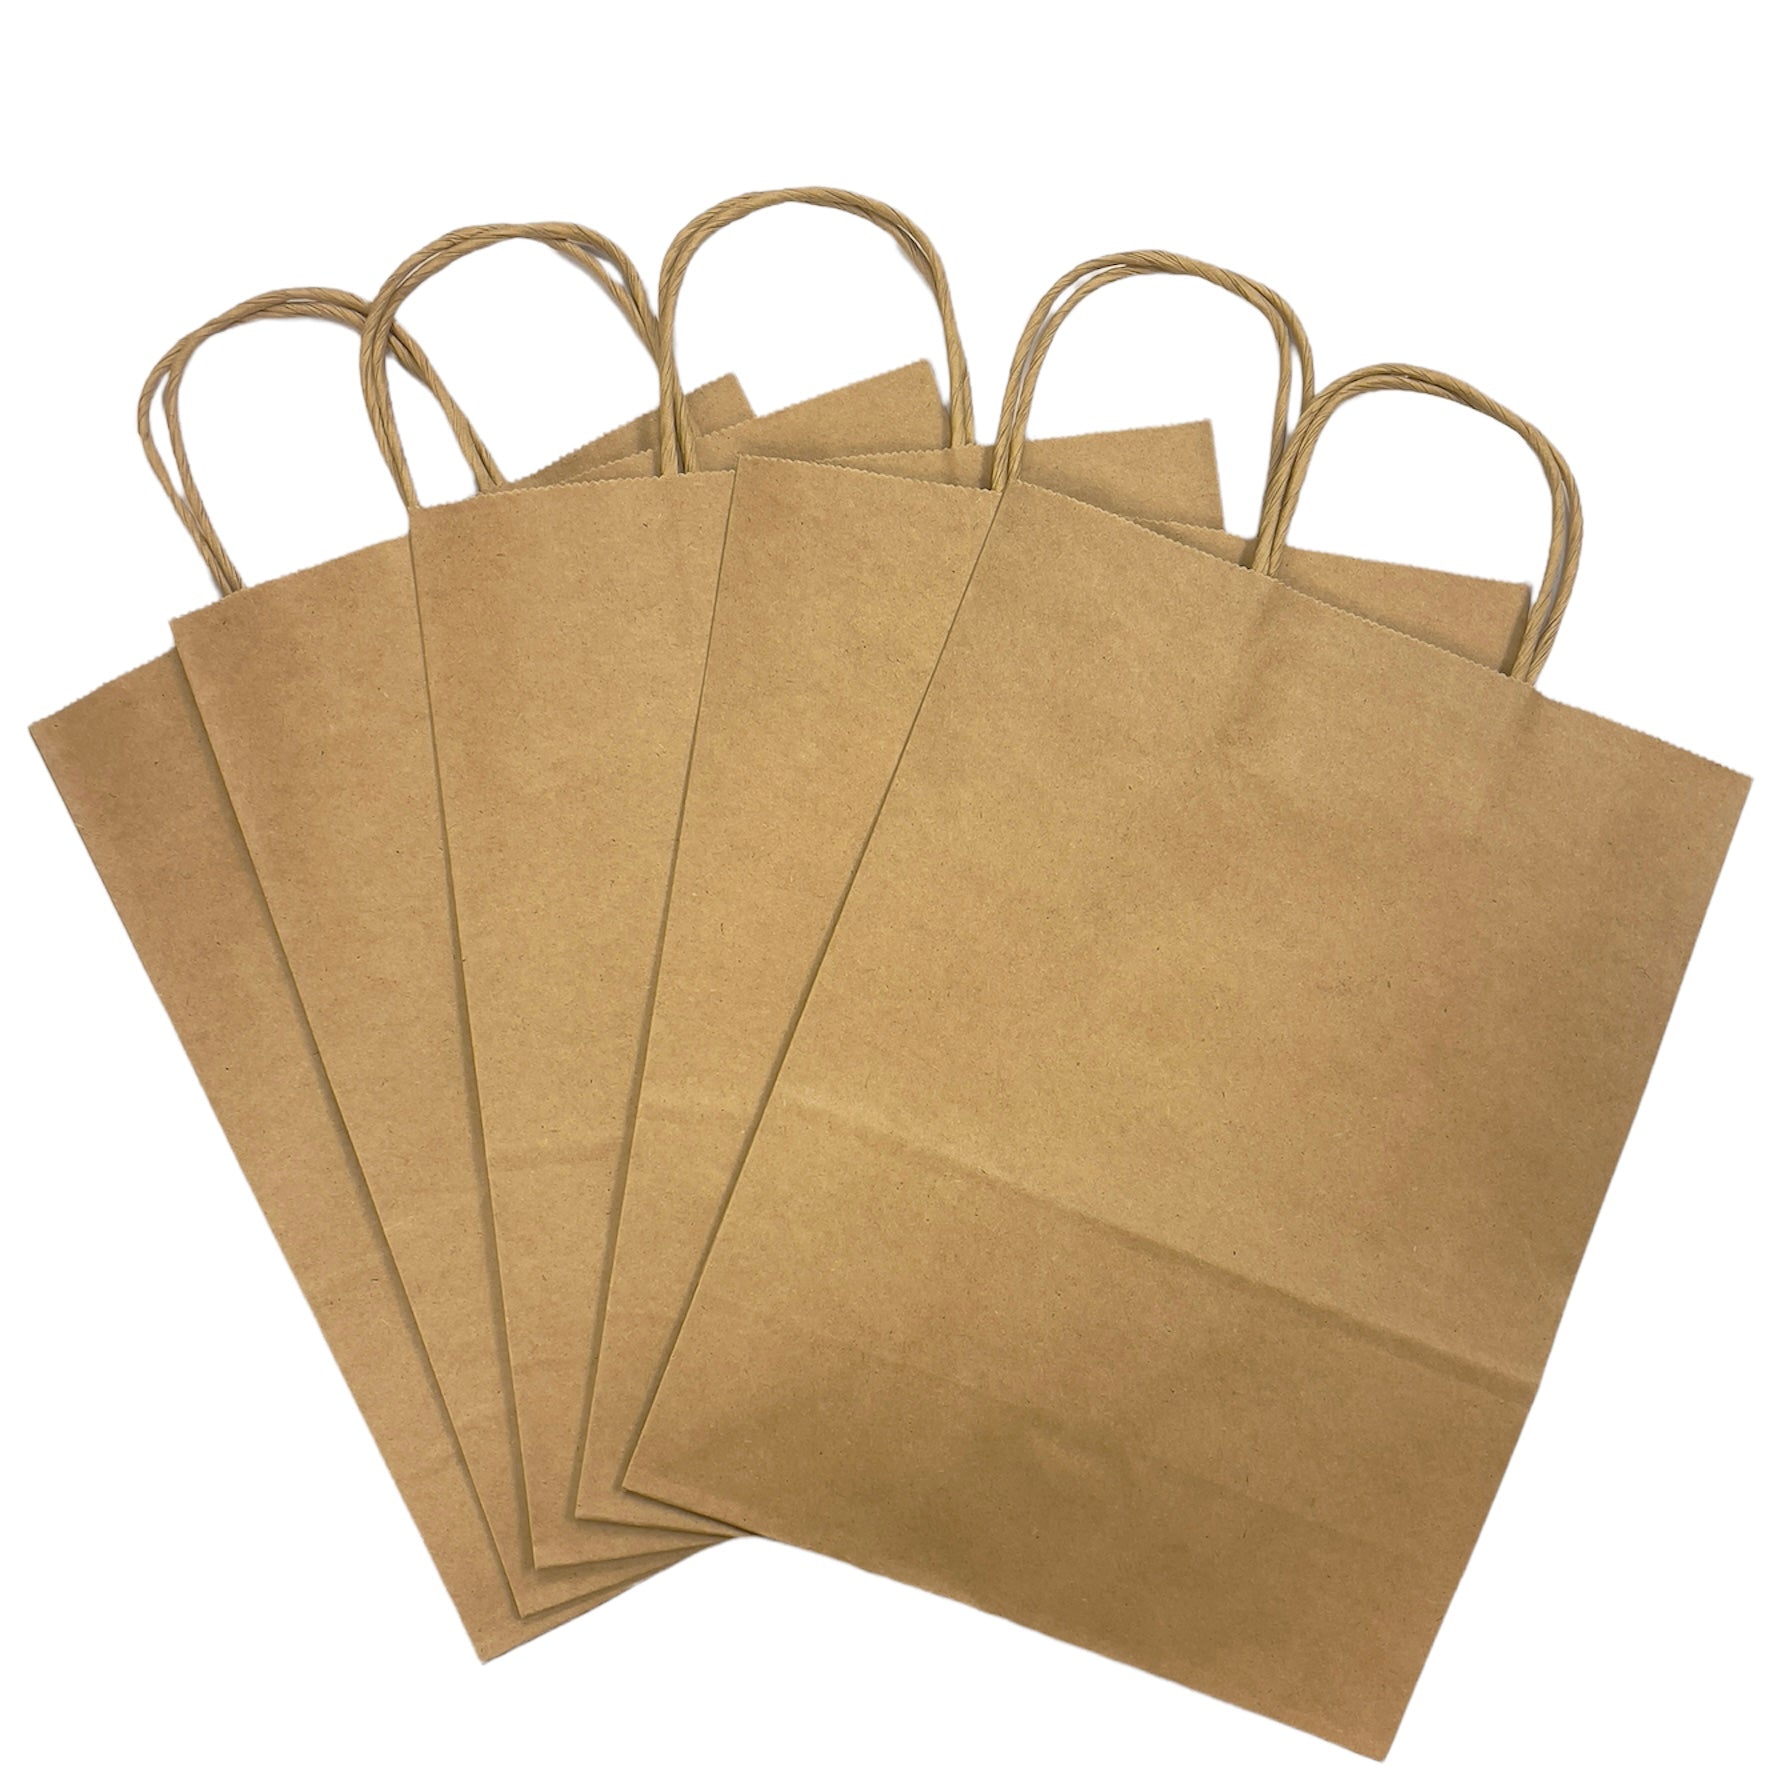 Folia - Papirpose med hank - 5 stk - Natur - Stor